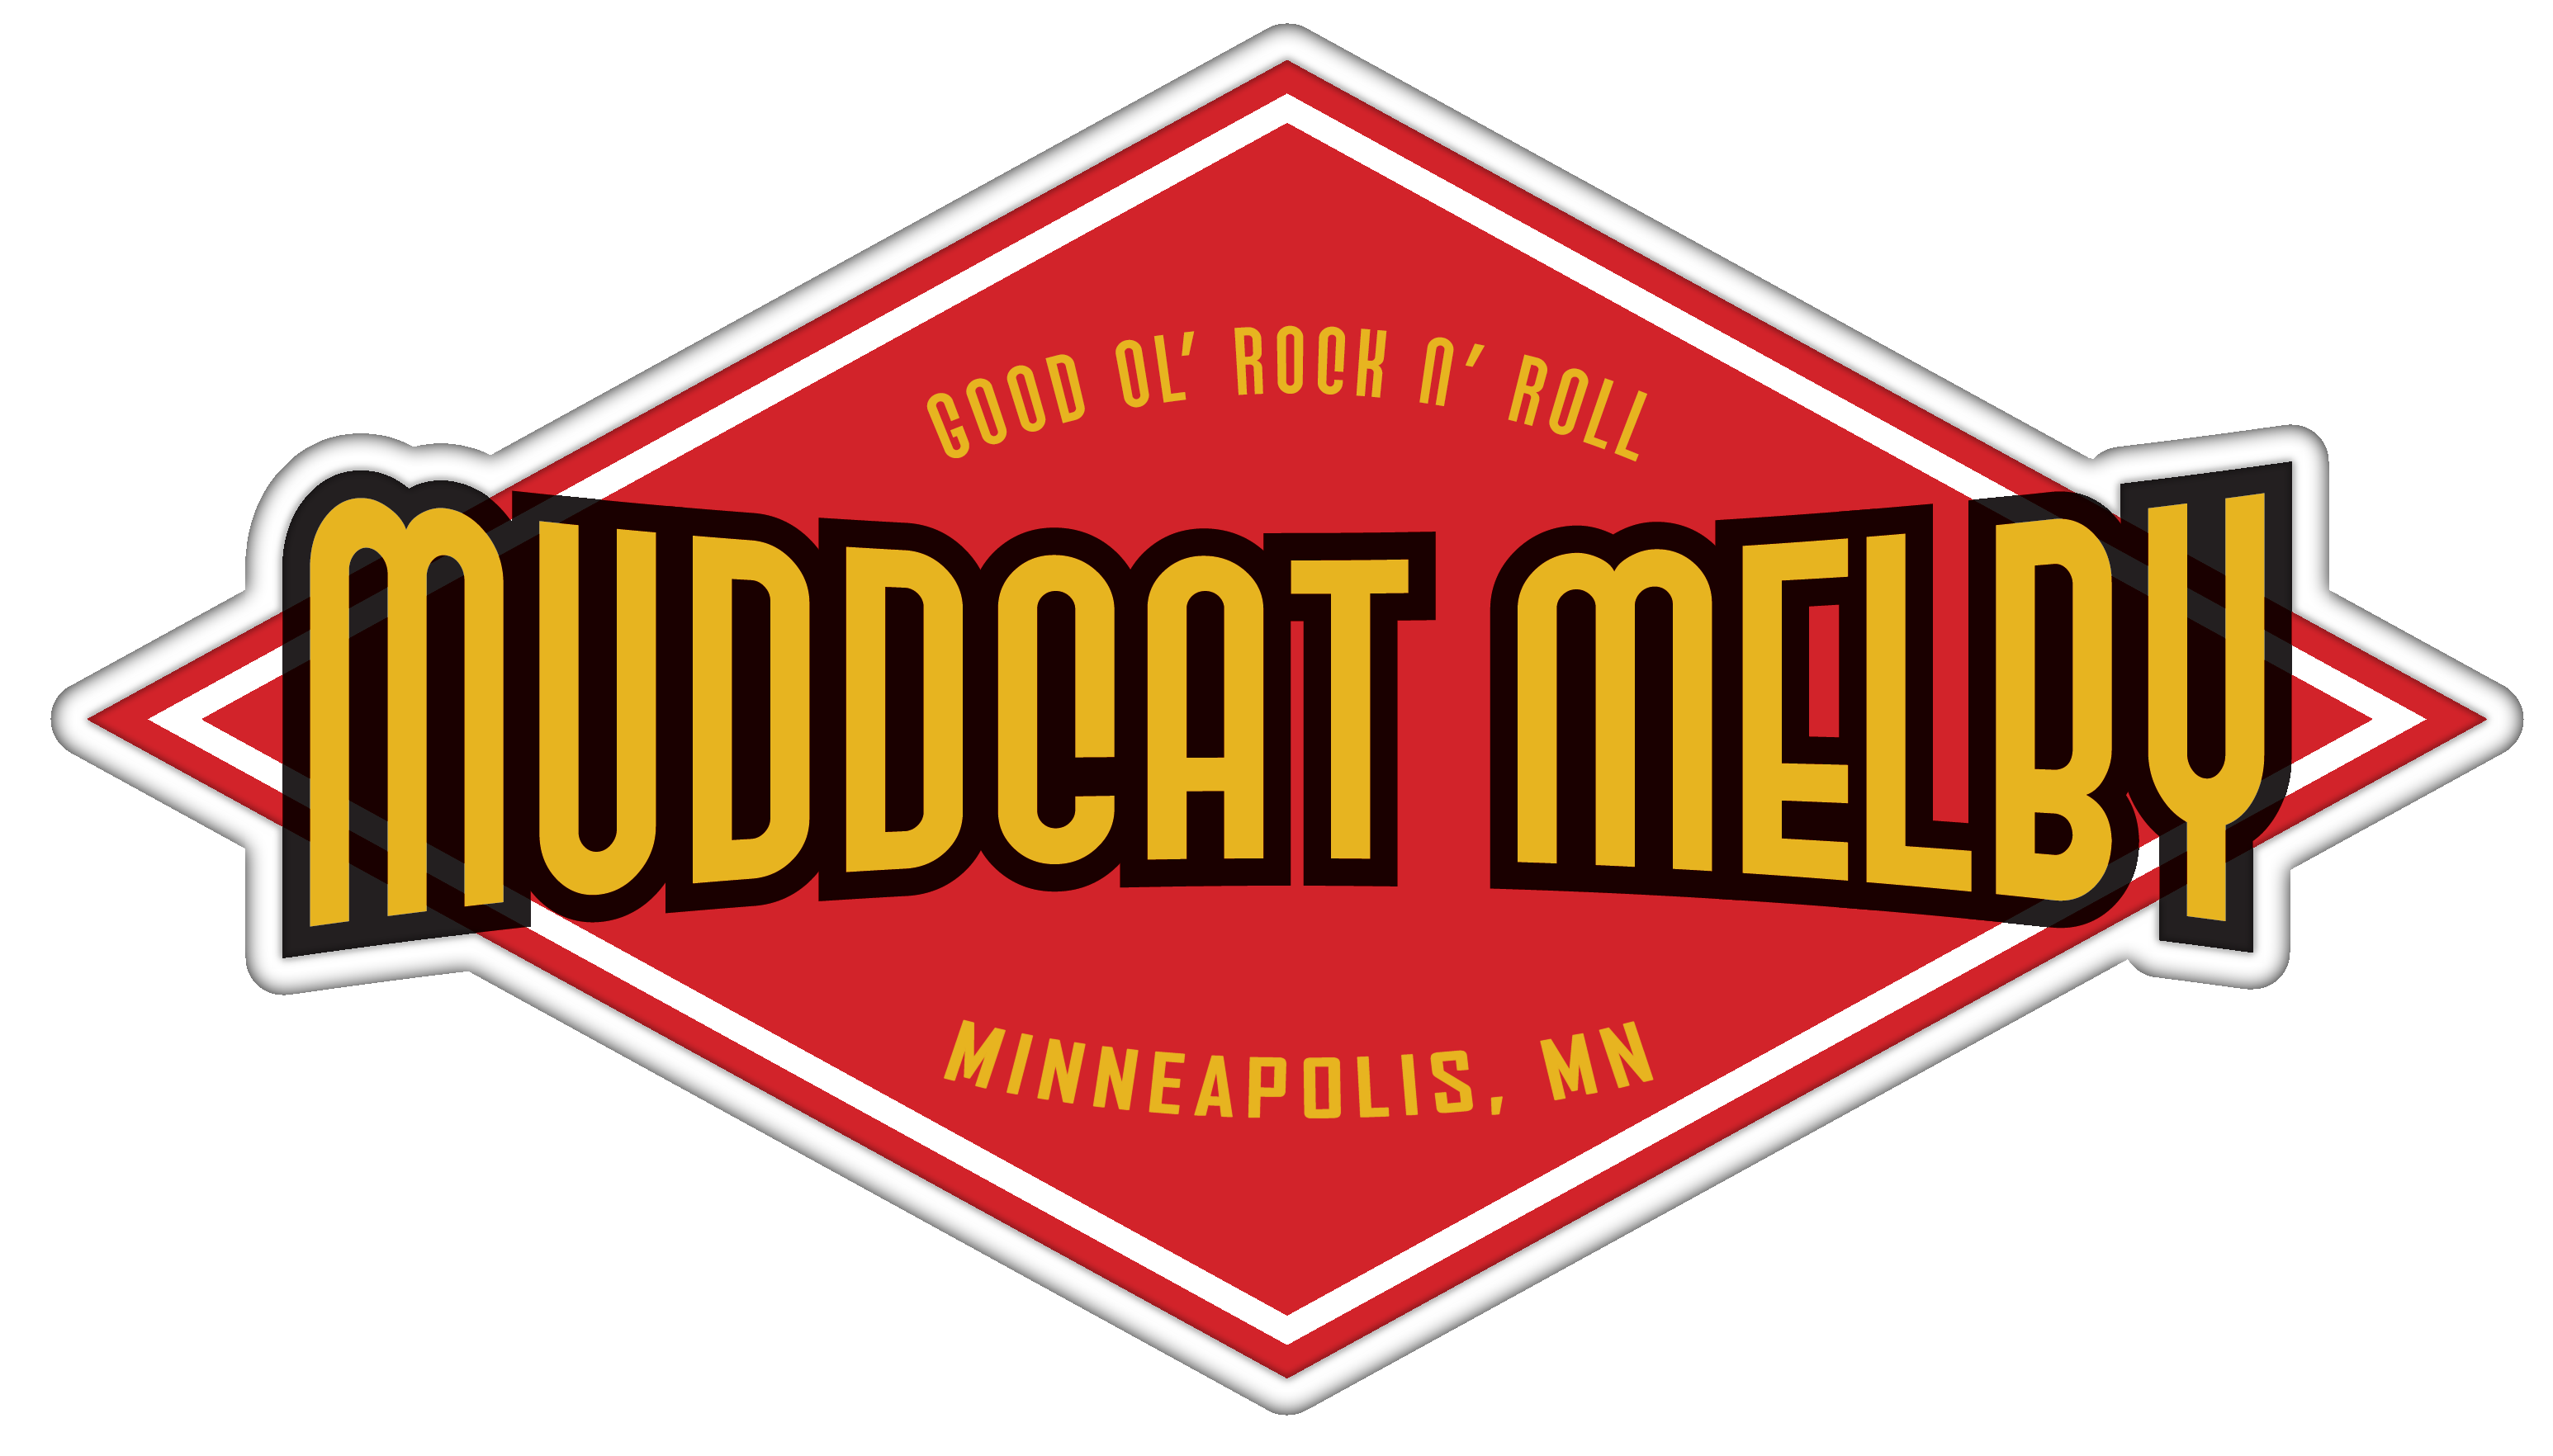 Muddcat Melby